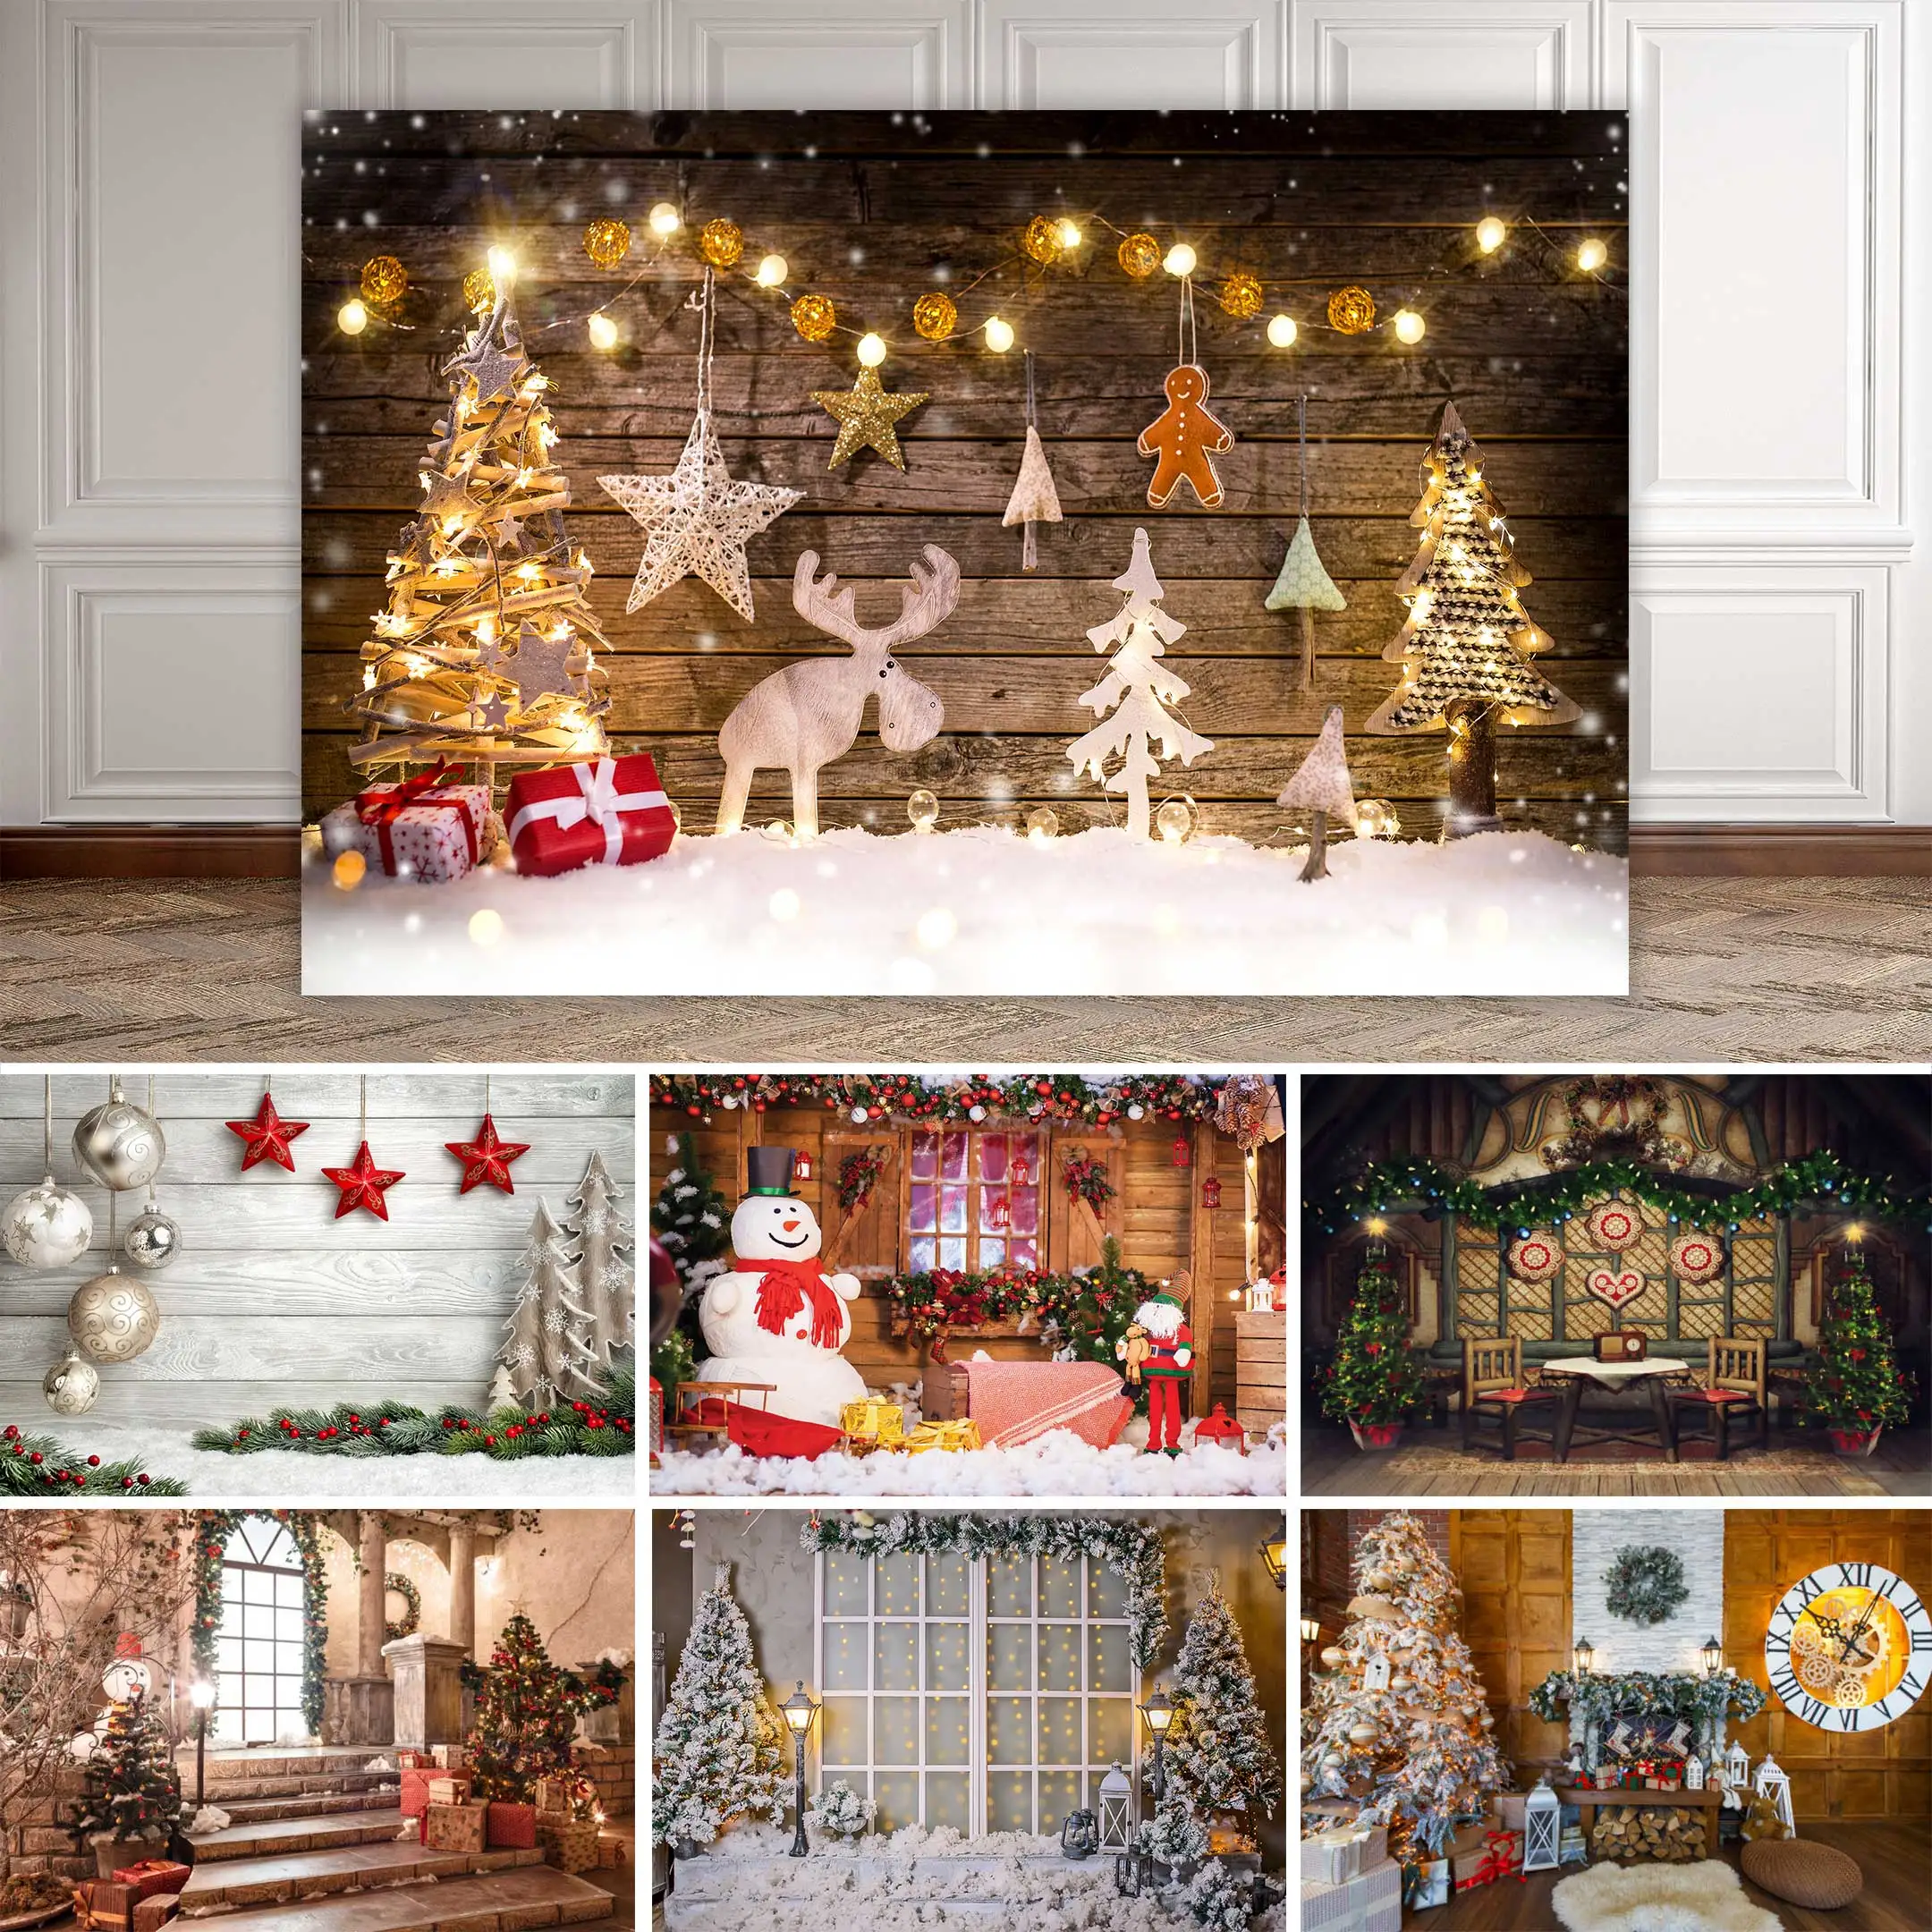 

NeoBack Vinyl Christmas Tree Fireplace Stockings Home Decoration Photocall Banner Photography Background Studio Photo Backdrop